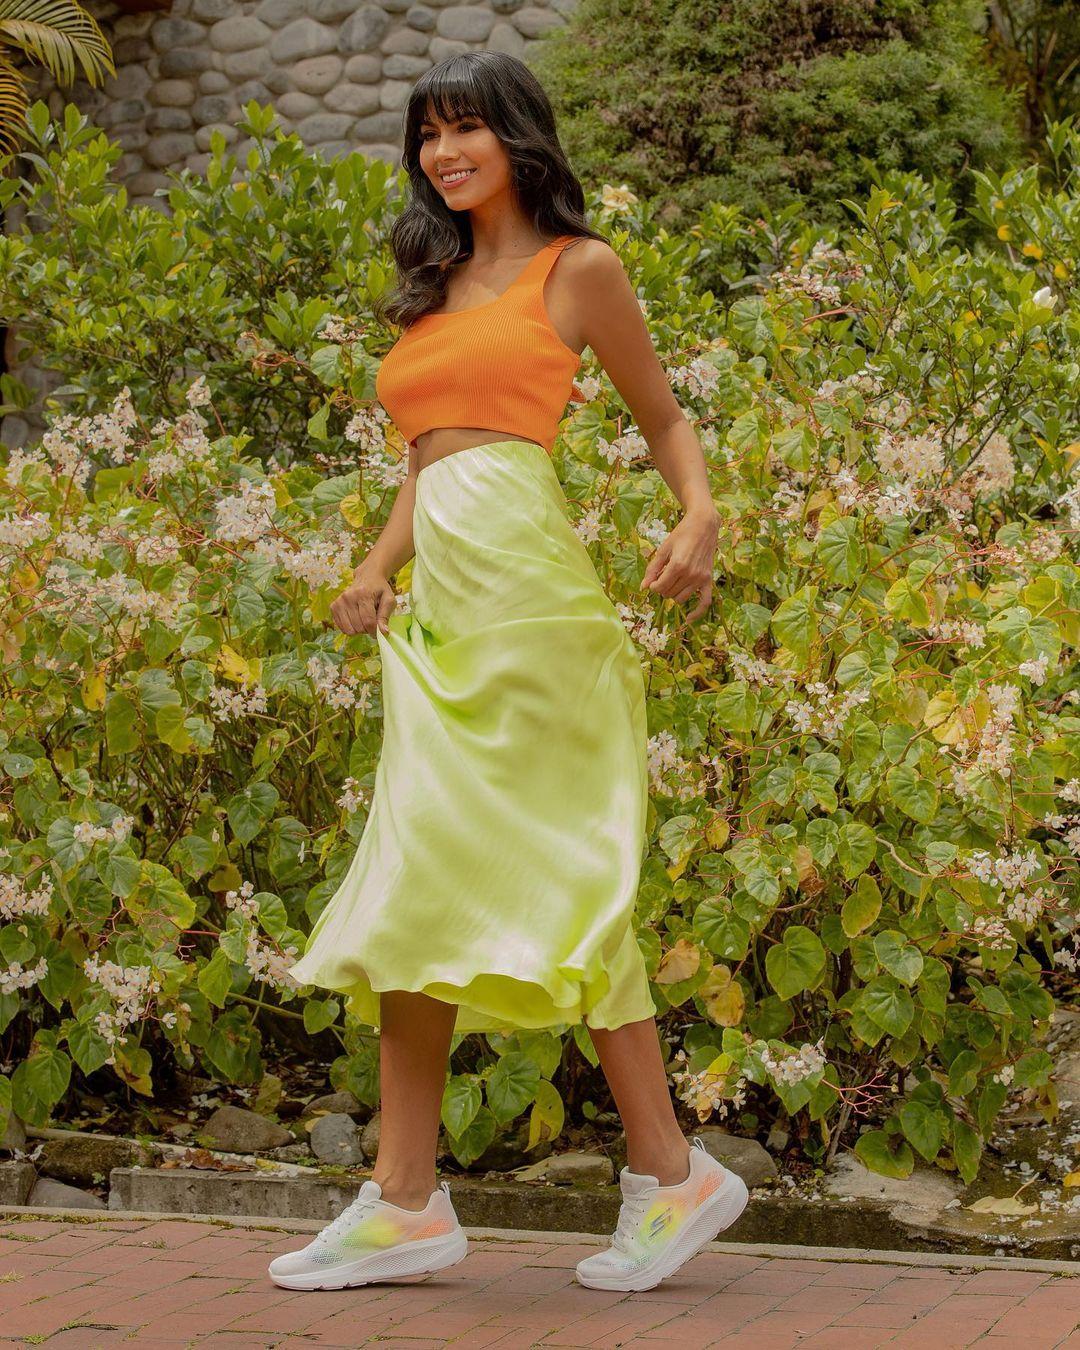 class="content__text"
 Una Rosa combinando con el jardín y sus @skecherslatino 😍 que hermoso verdad?
 #skechers 

Ph: @sergiomadridphoto 
H&amp;M: @luisquinterog1 
Styling: @gopetergoblog 
Director creativo: @monicaloladiaz 

 #styleinspo #ootd #fashion #lifestyle 
 